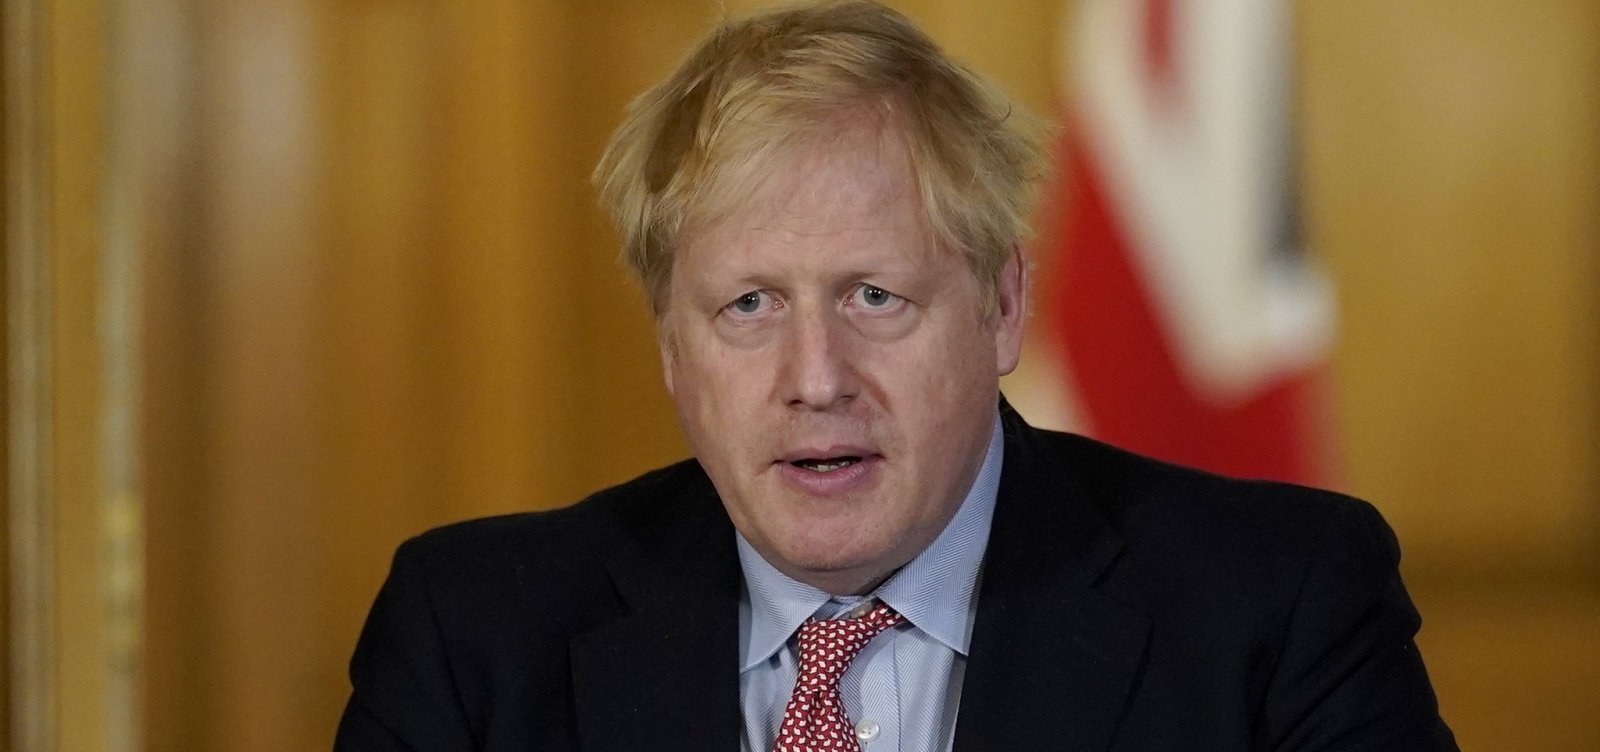 Nova variante do coronavírus encontrada na Inglaterra pode ser mais letal, diz Boris Johnson 